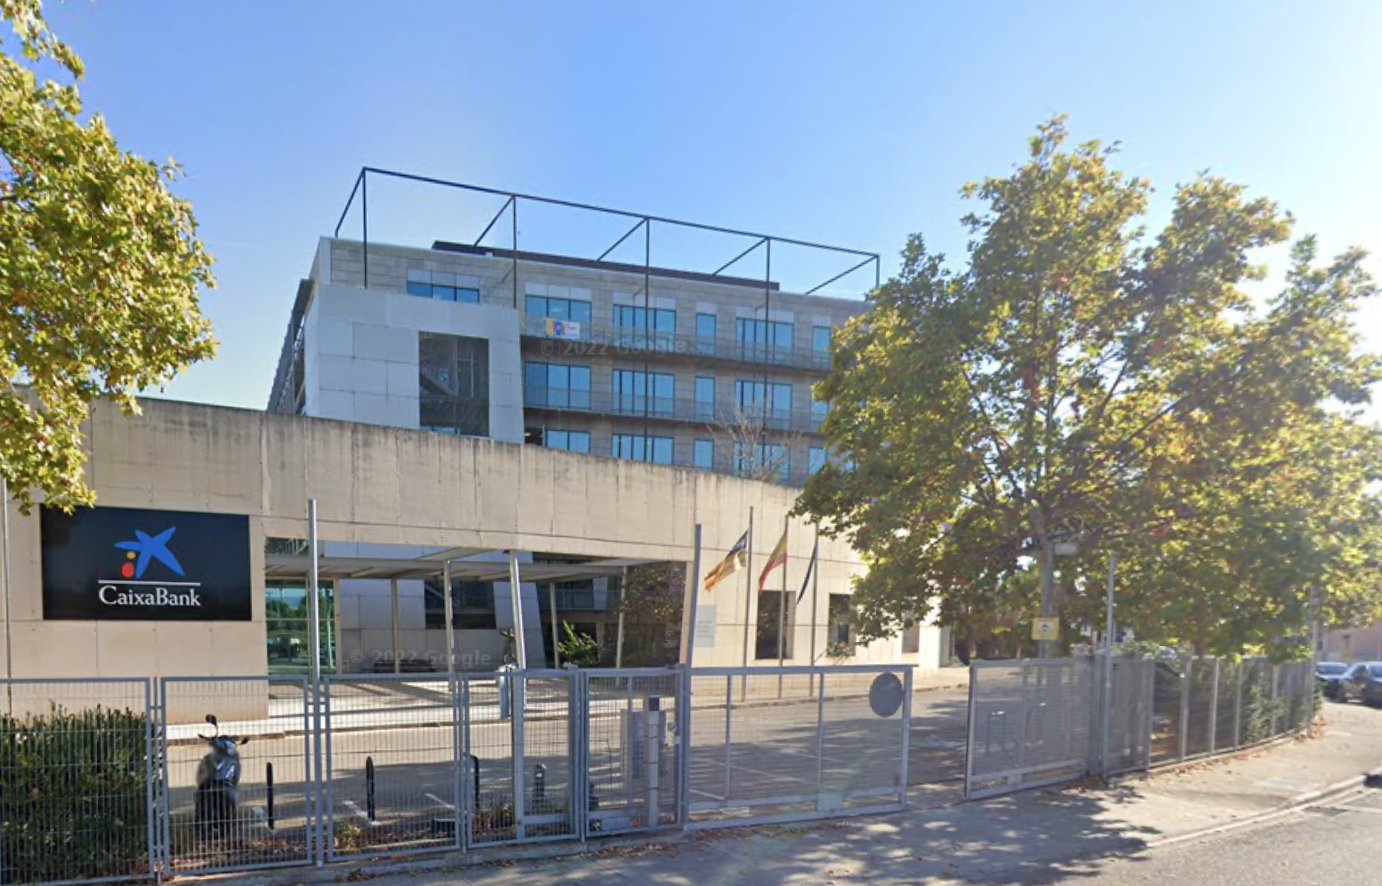 Caixabank sells an office building in Palma de Mallorca for €20.7M